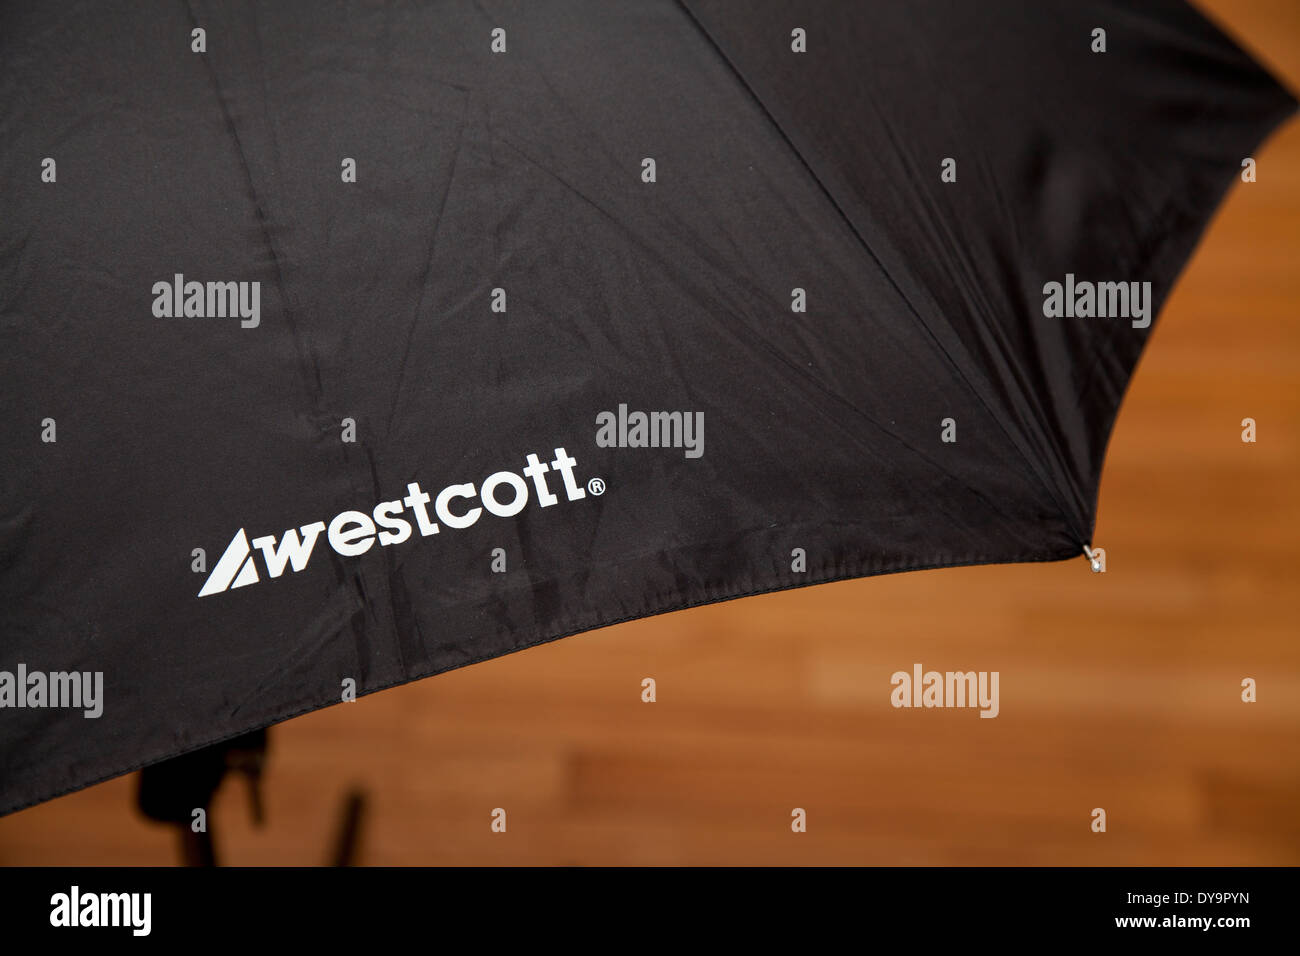 westcott studio lighting umbrella Stock Photo